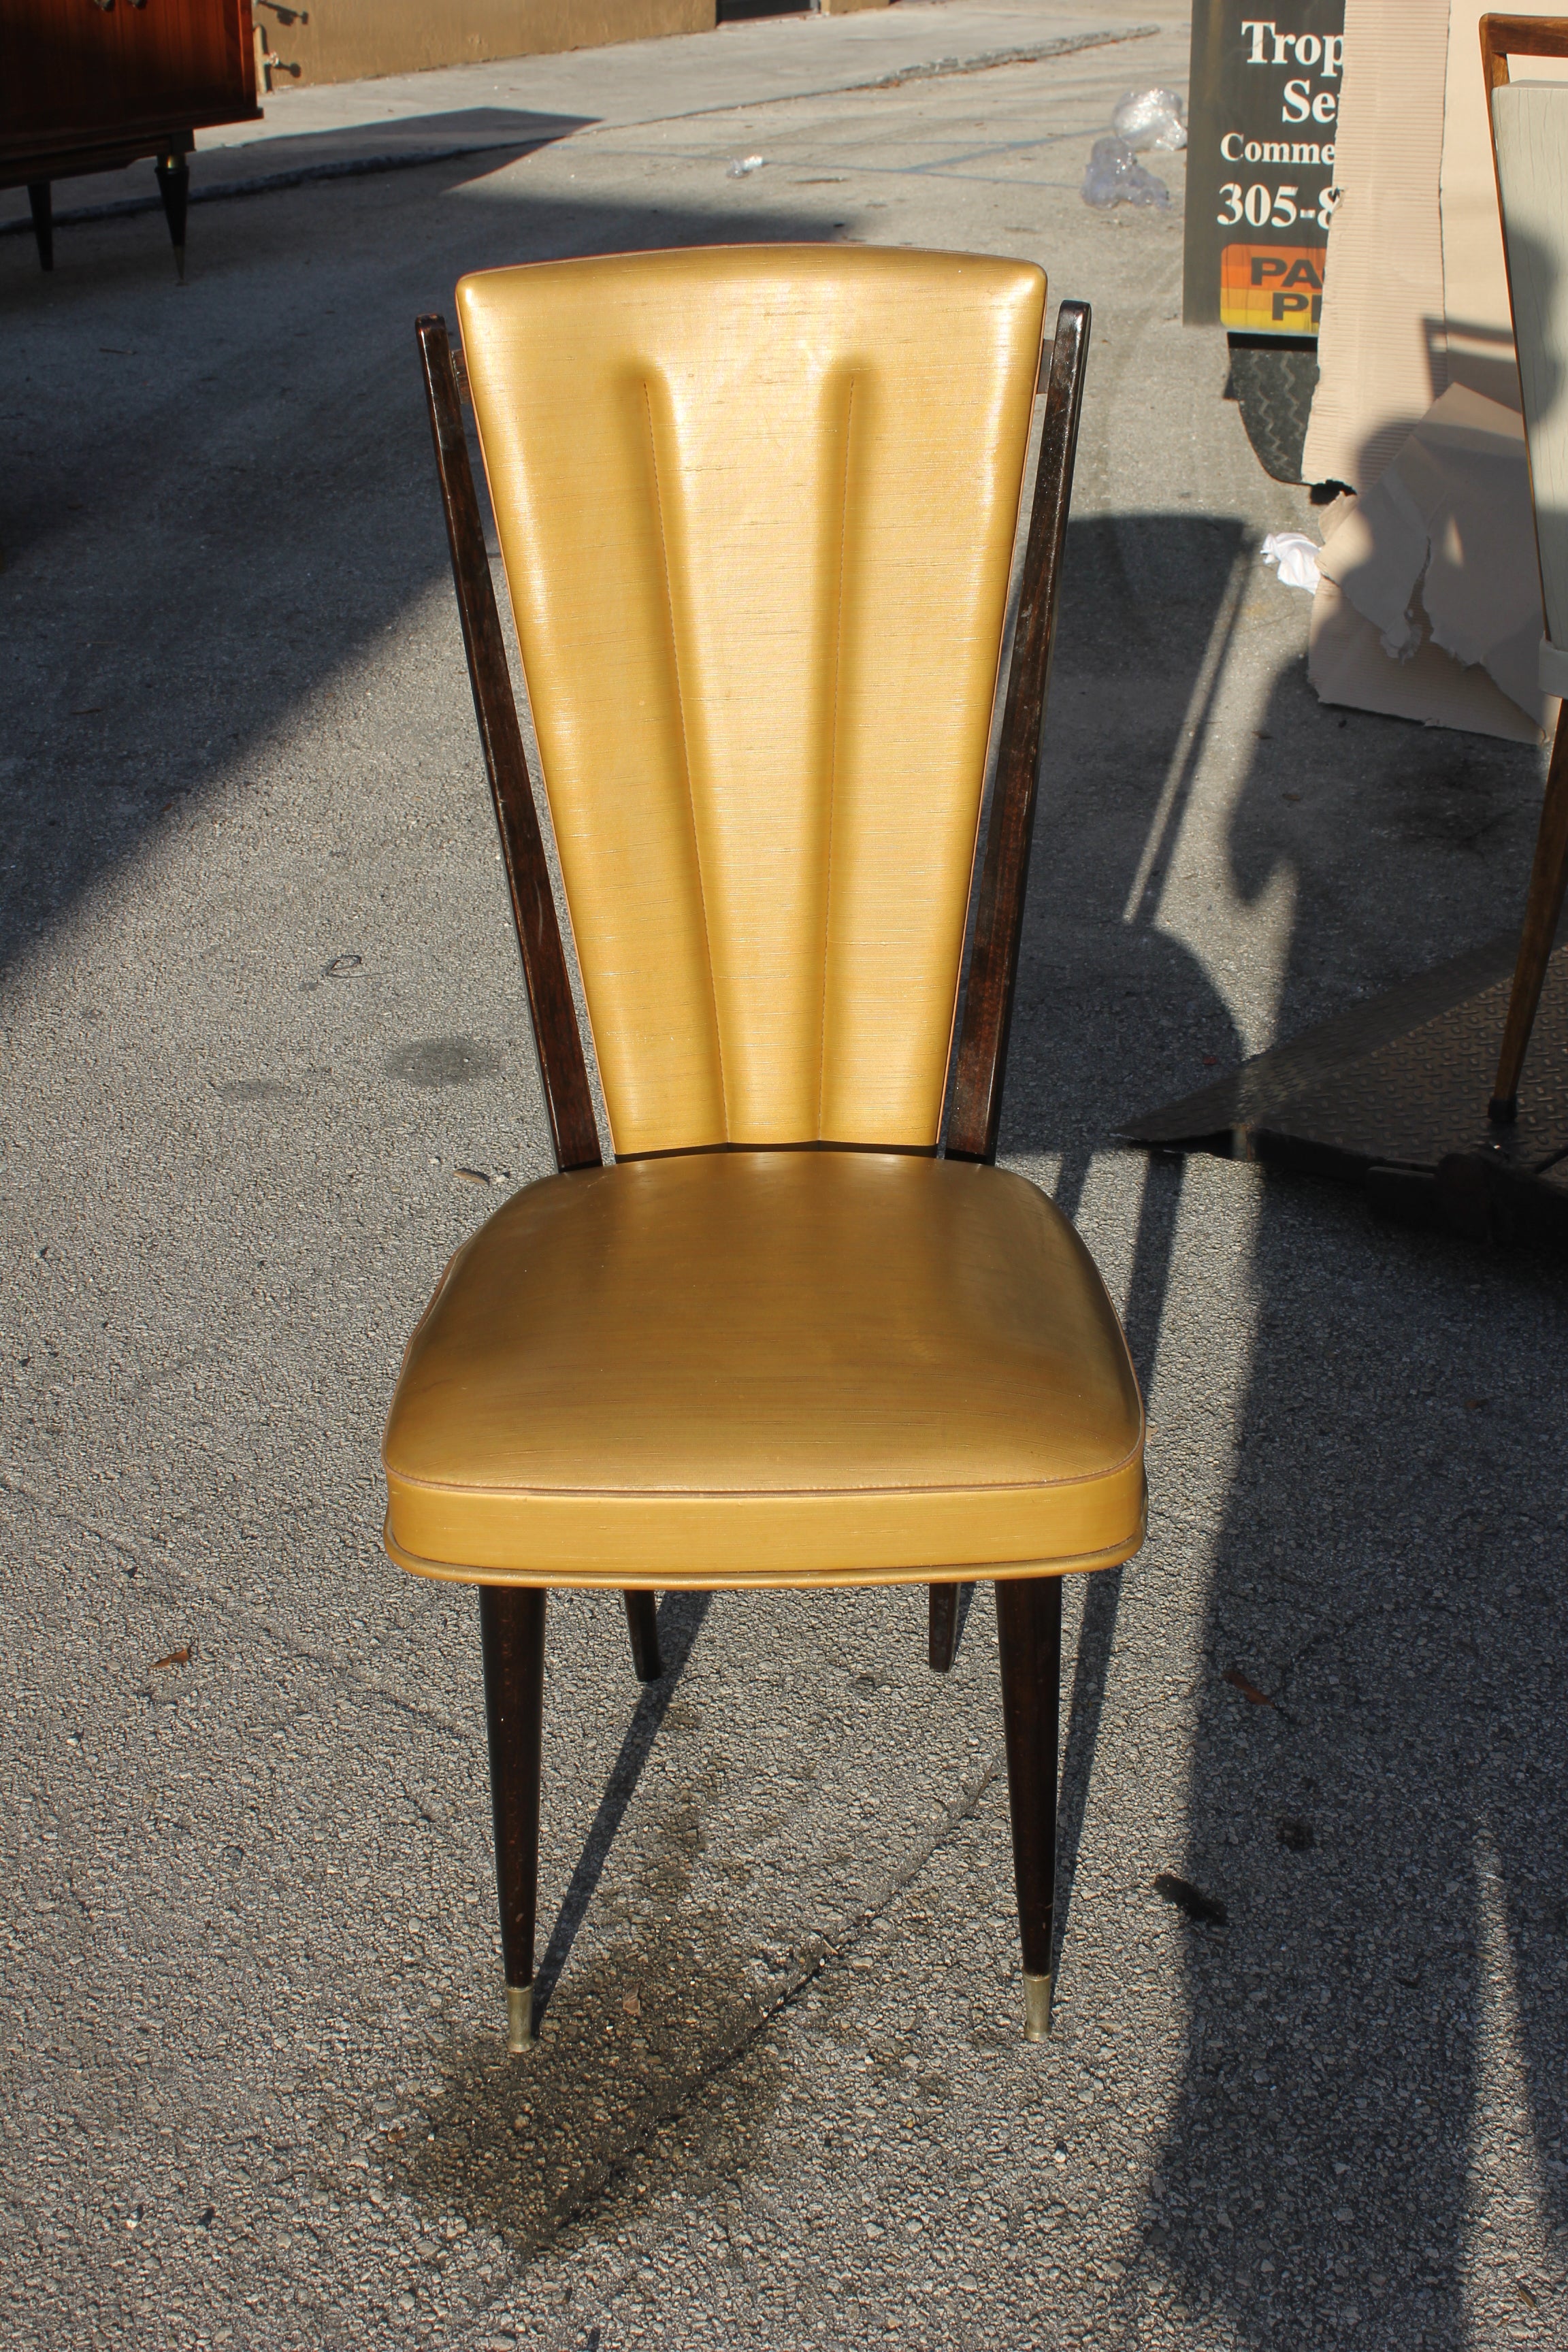 Set 4 French Art Deco Ebonized Walnut Dining Chairs